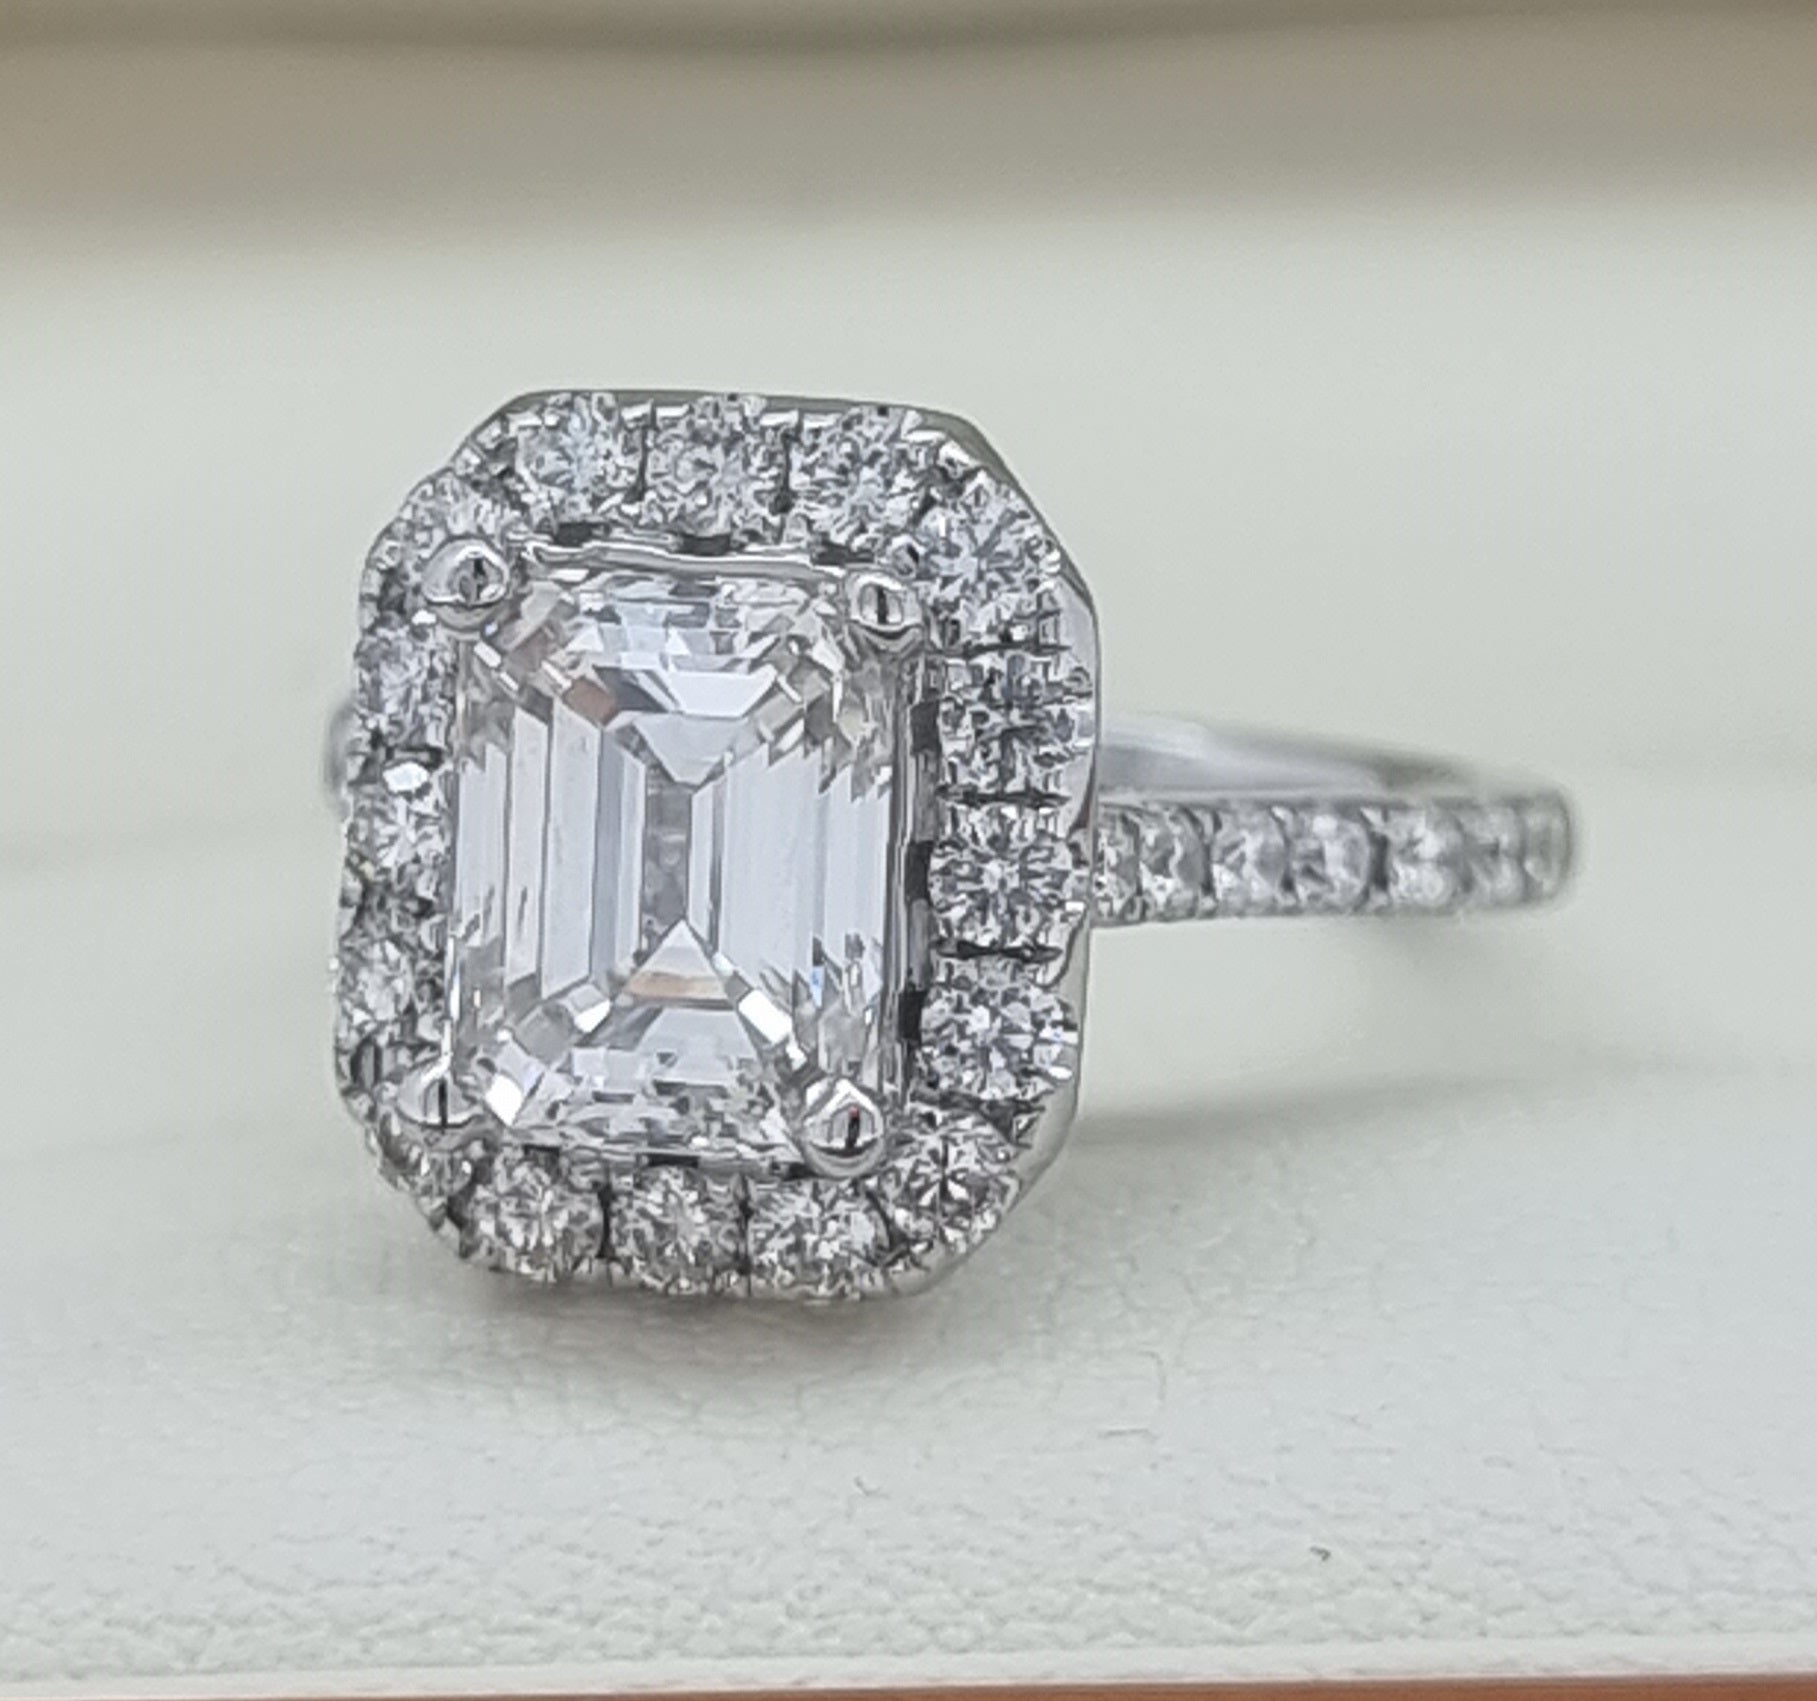 Stunning Emerald Cut Diamond Engagement Ring - over 2 Carats!